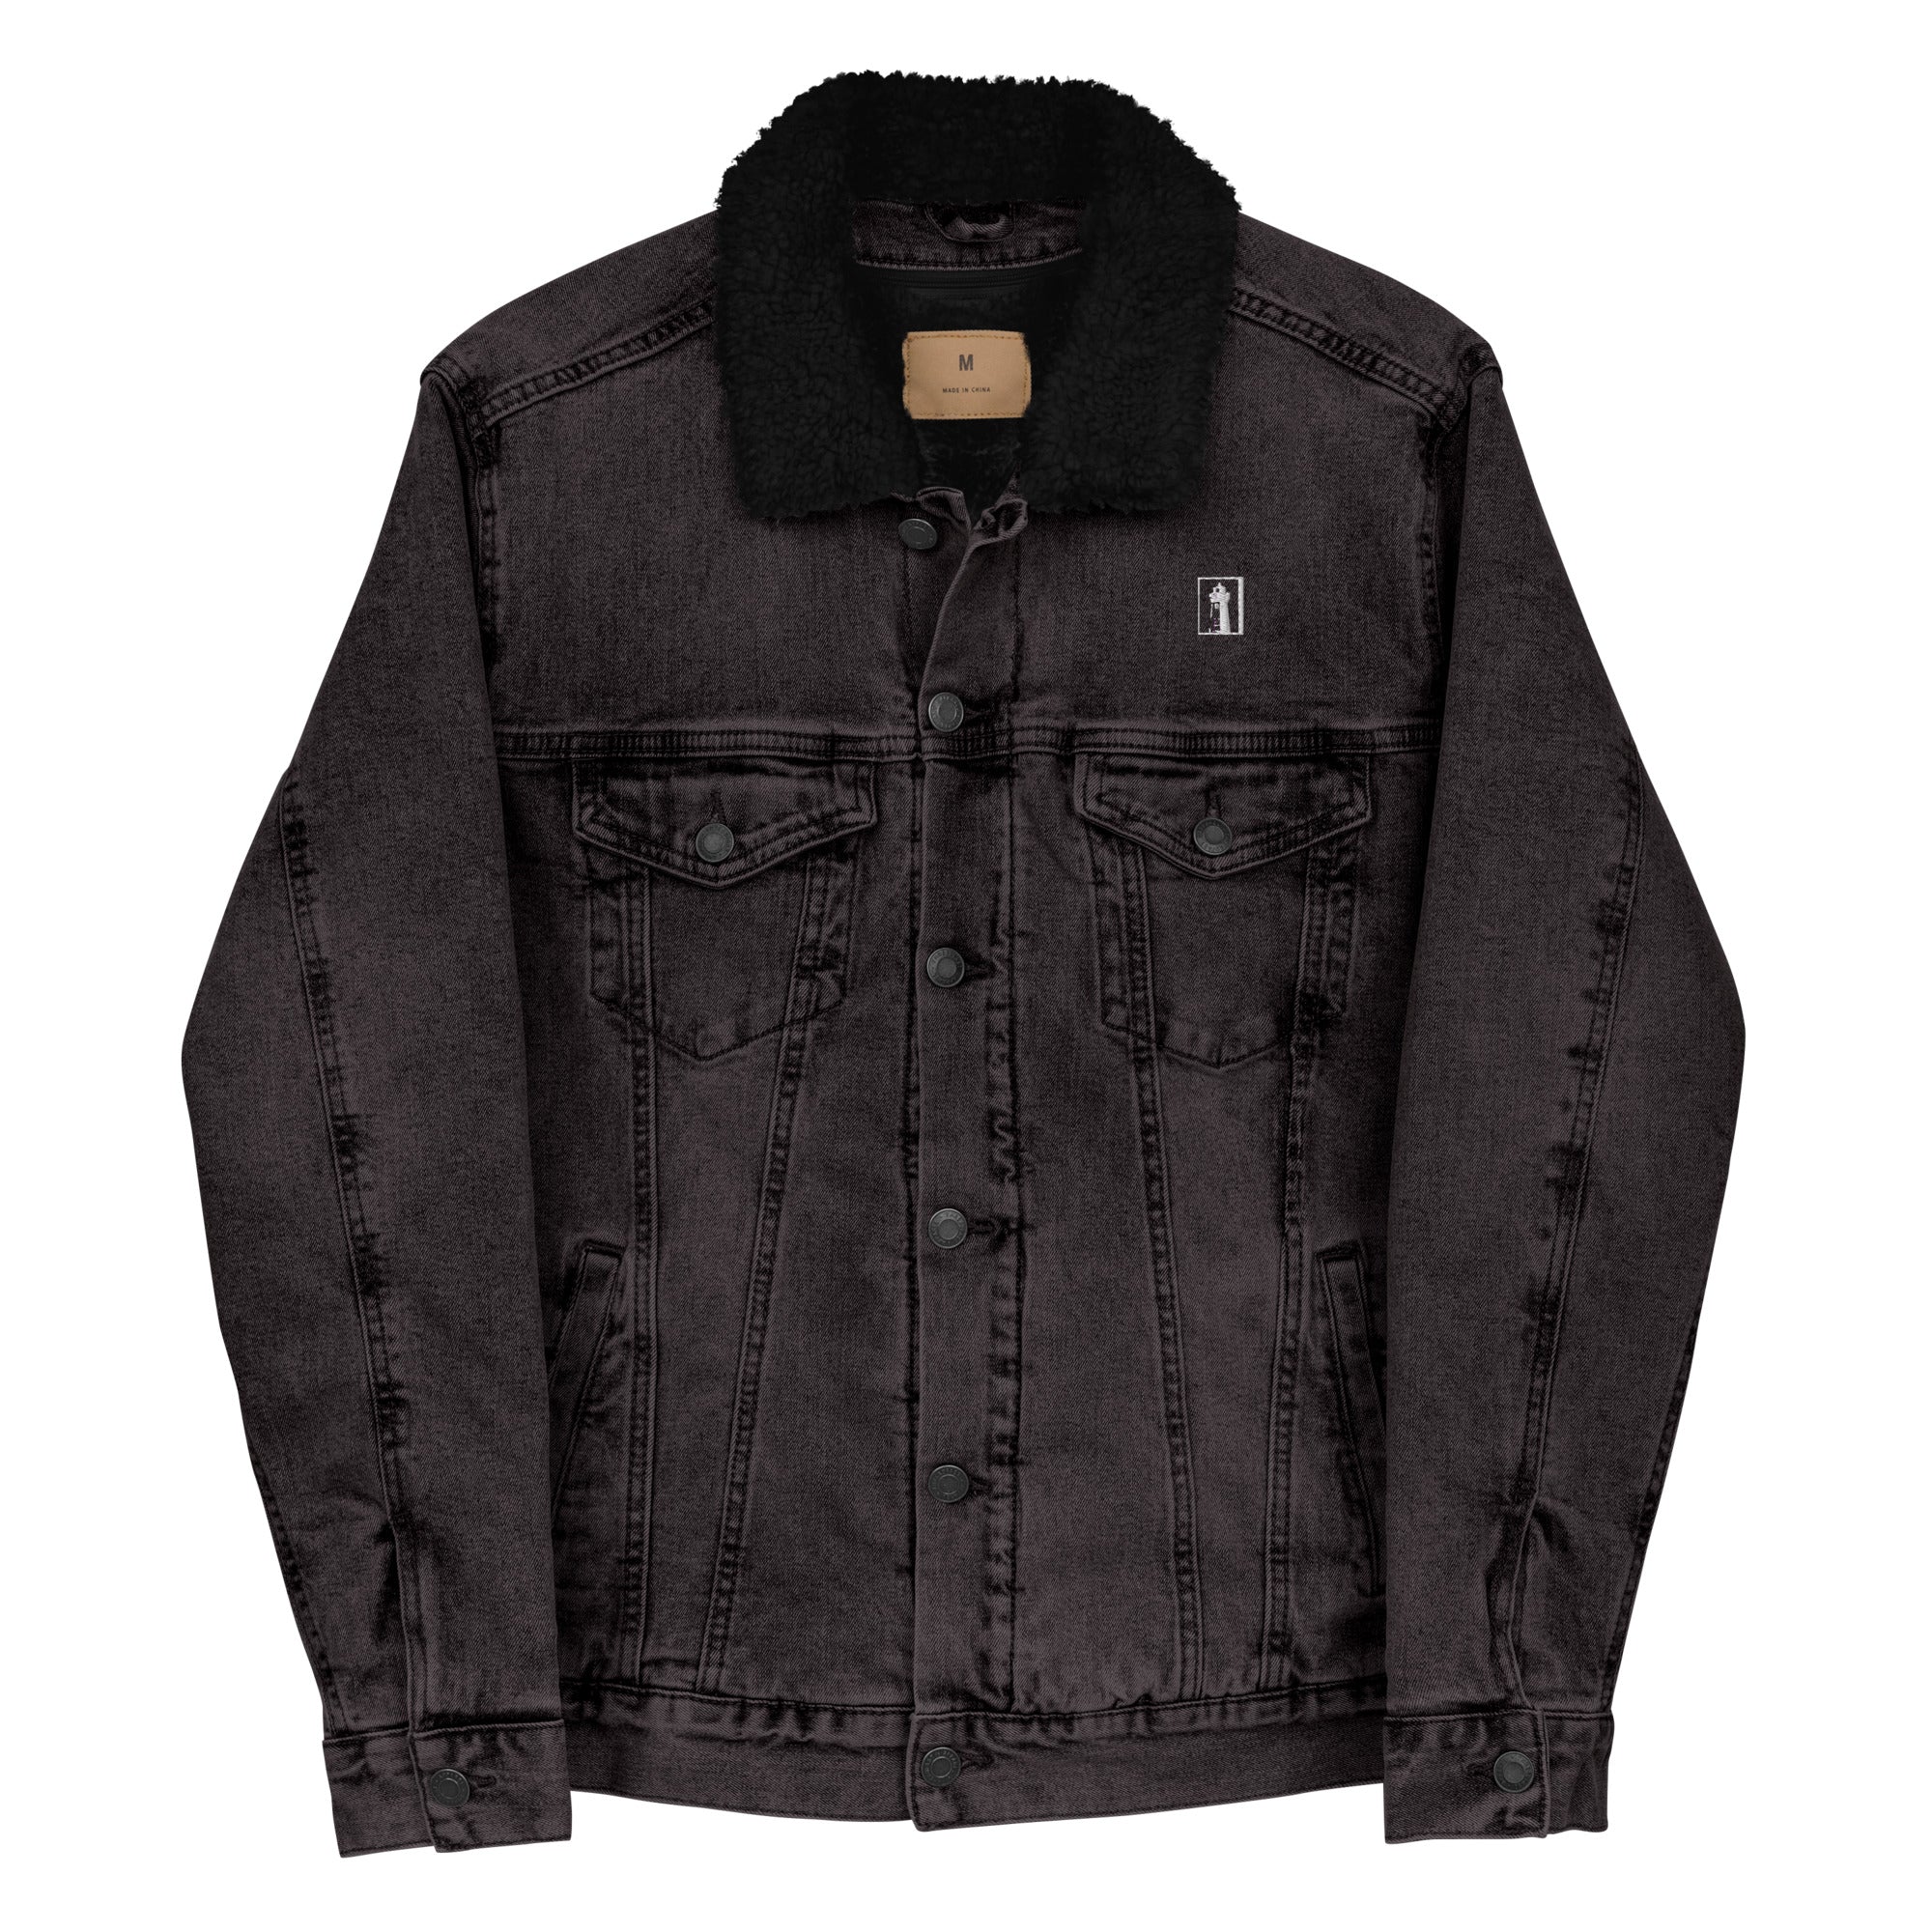 Calvin Klein Jeans sherpa lined denim jacket in black | ASOS